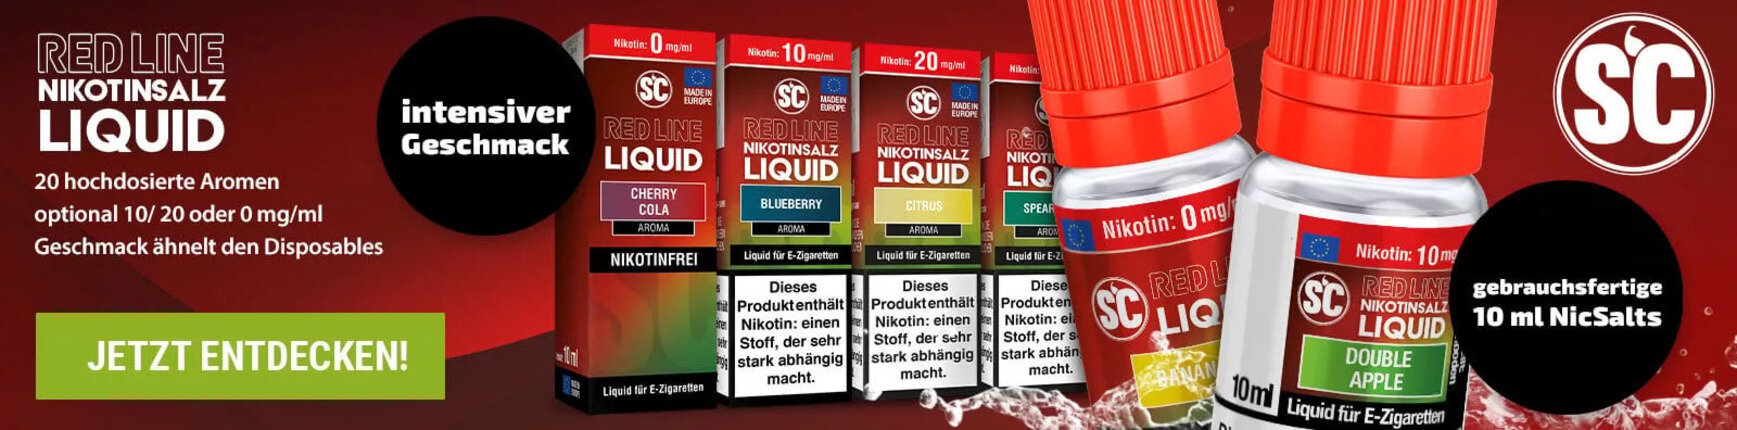 SC Liquids